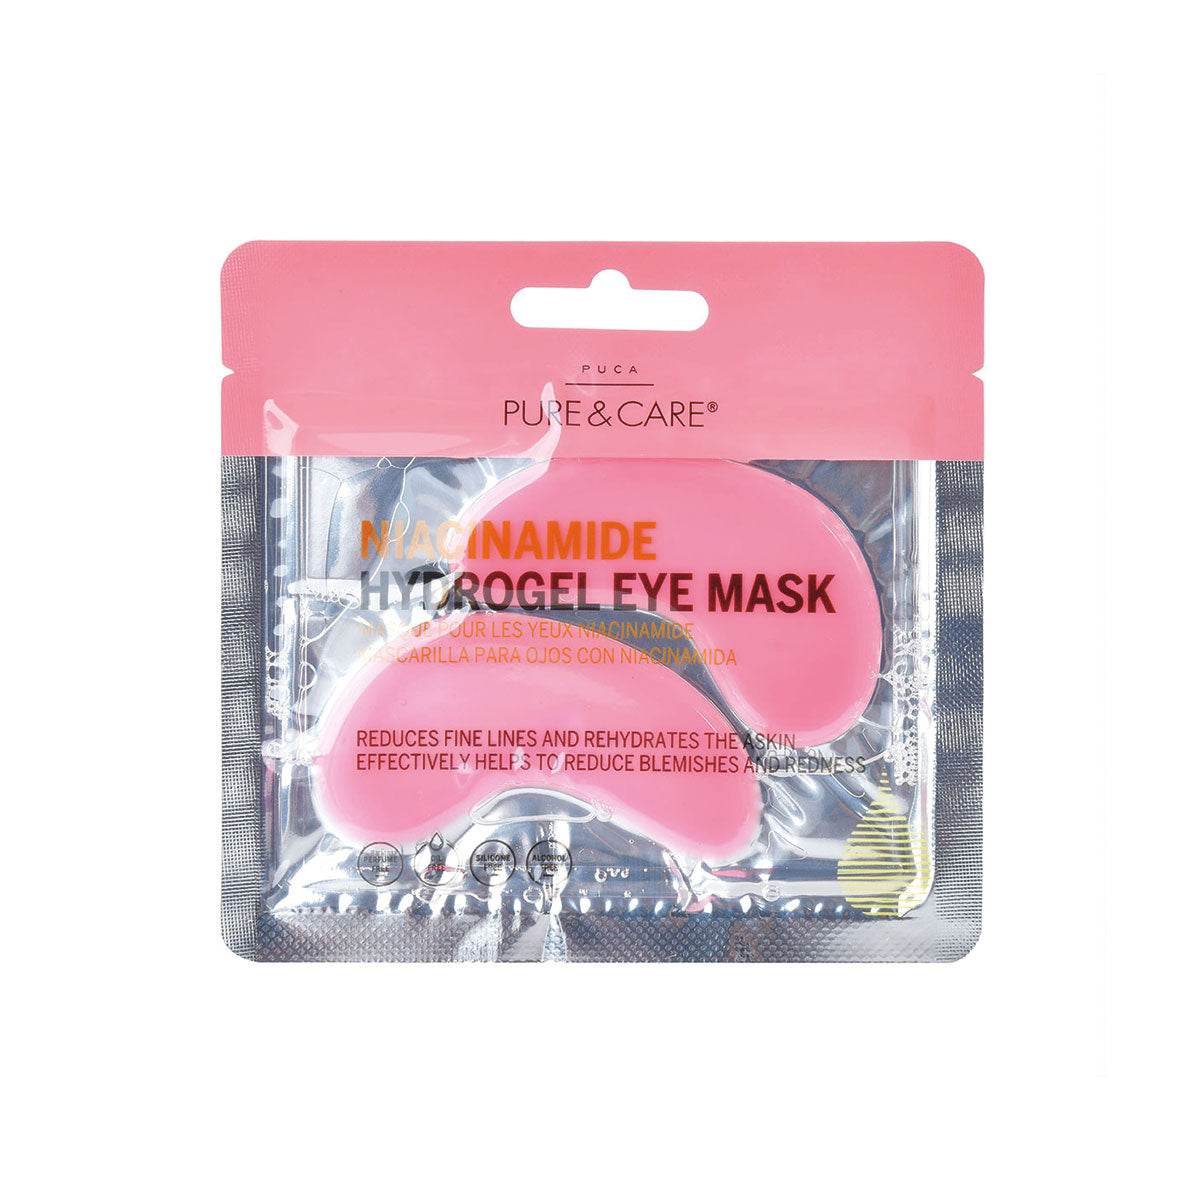 Hydrogel Eye Mask Niacinamide | PUCA - PURE & CARE